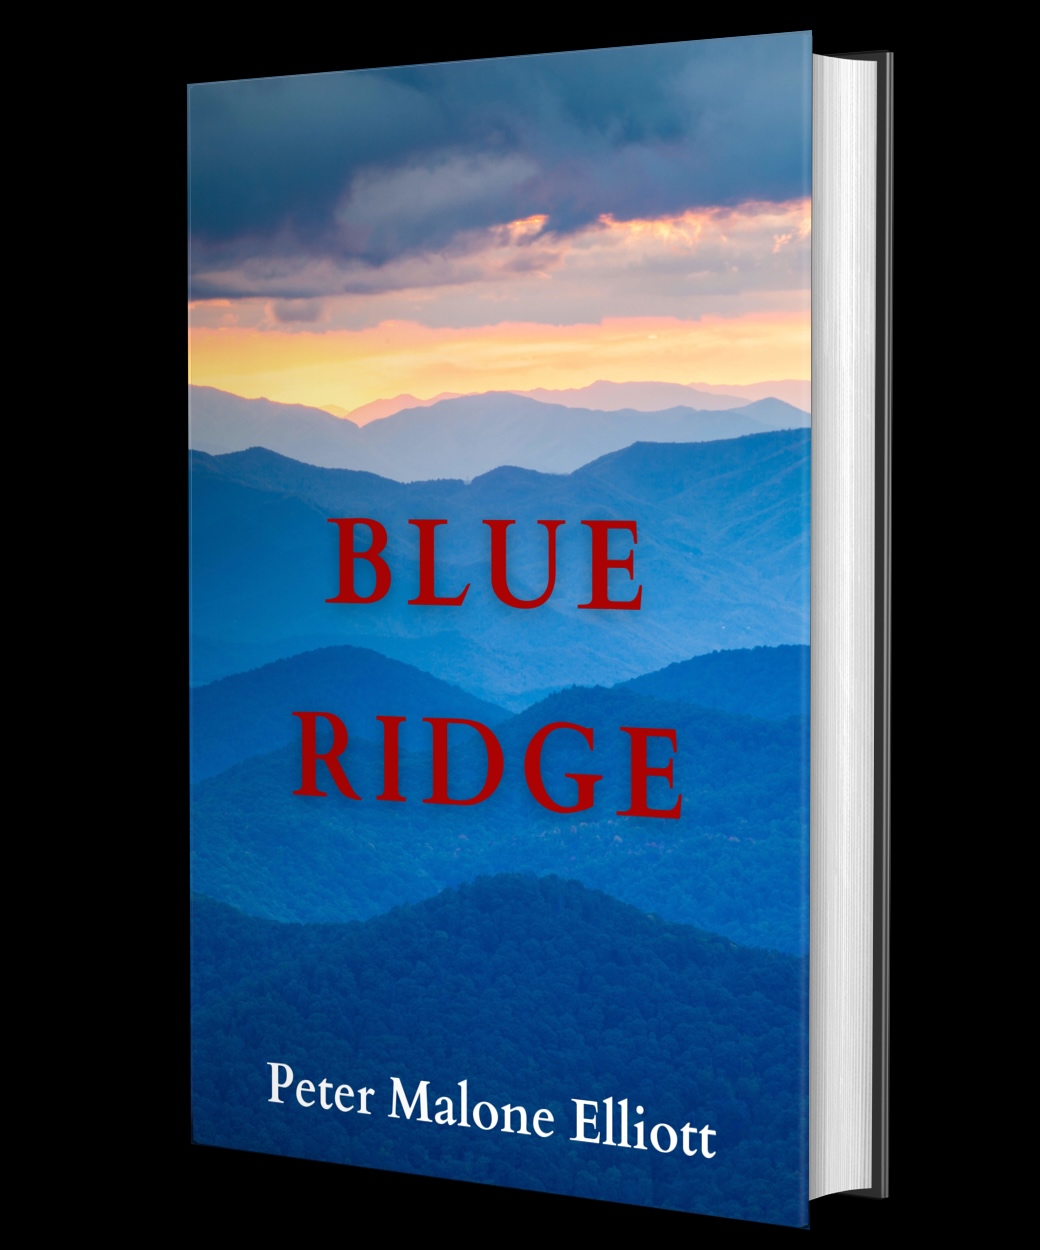 Blue Ridge by Peter Malone Elliott